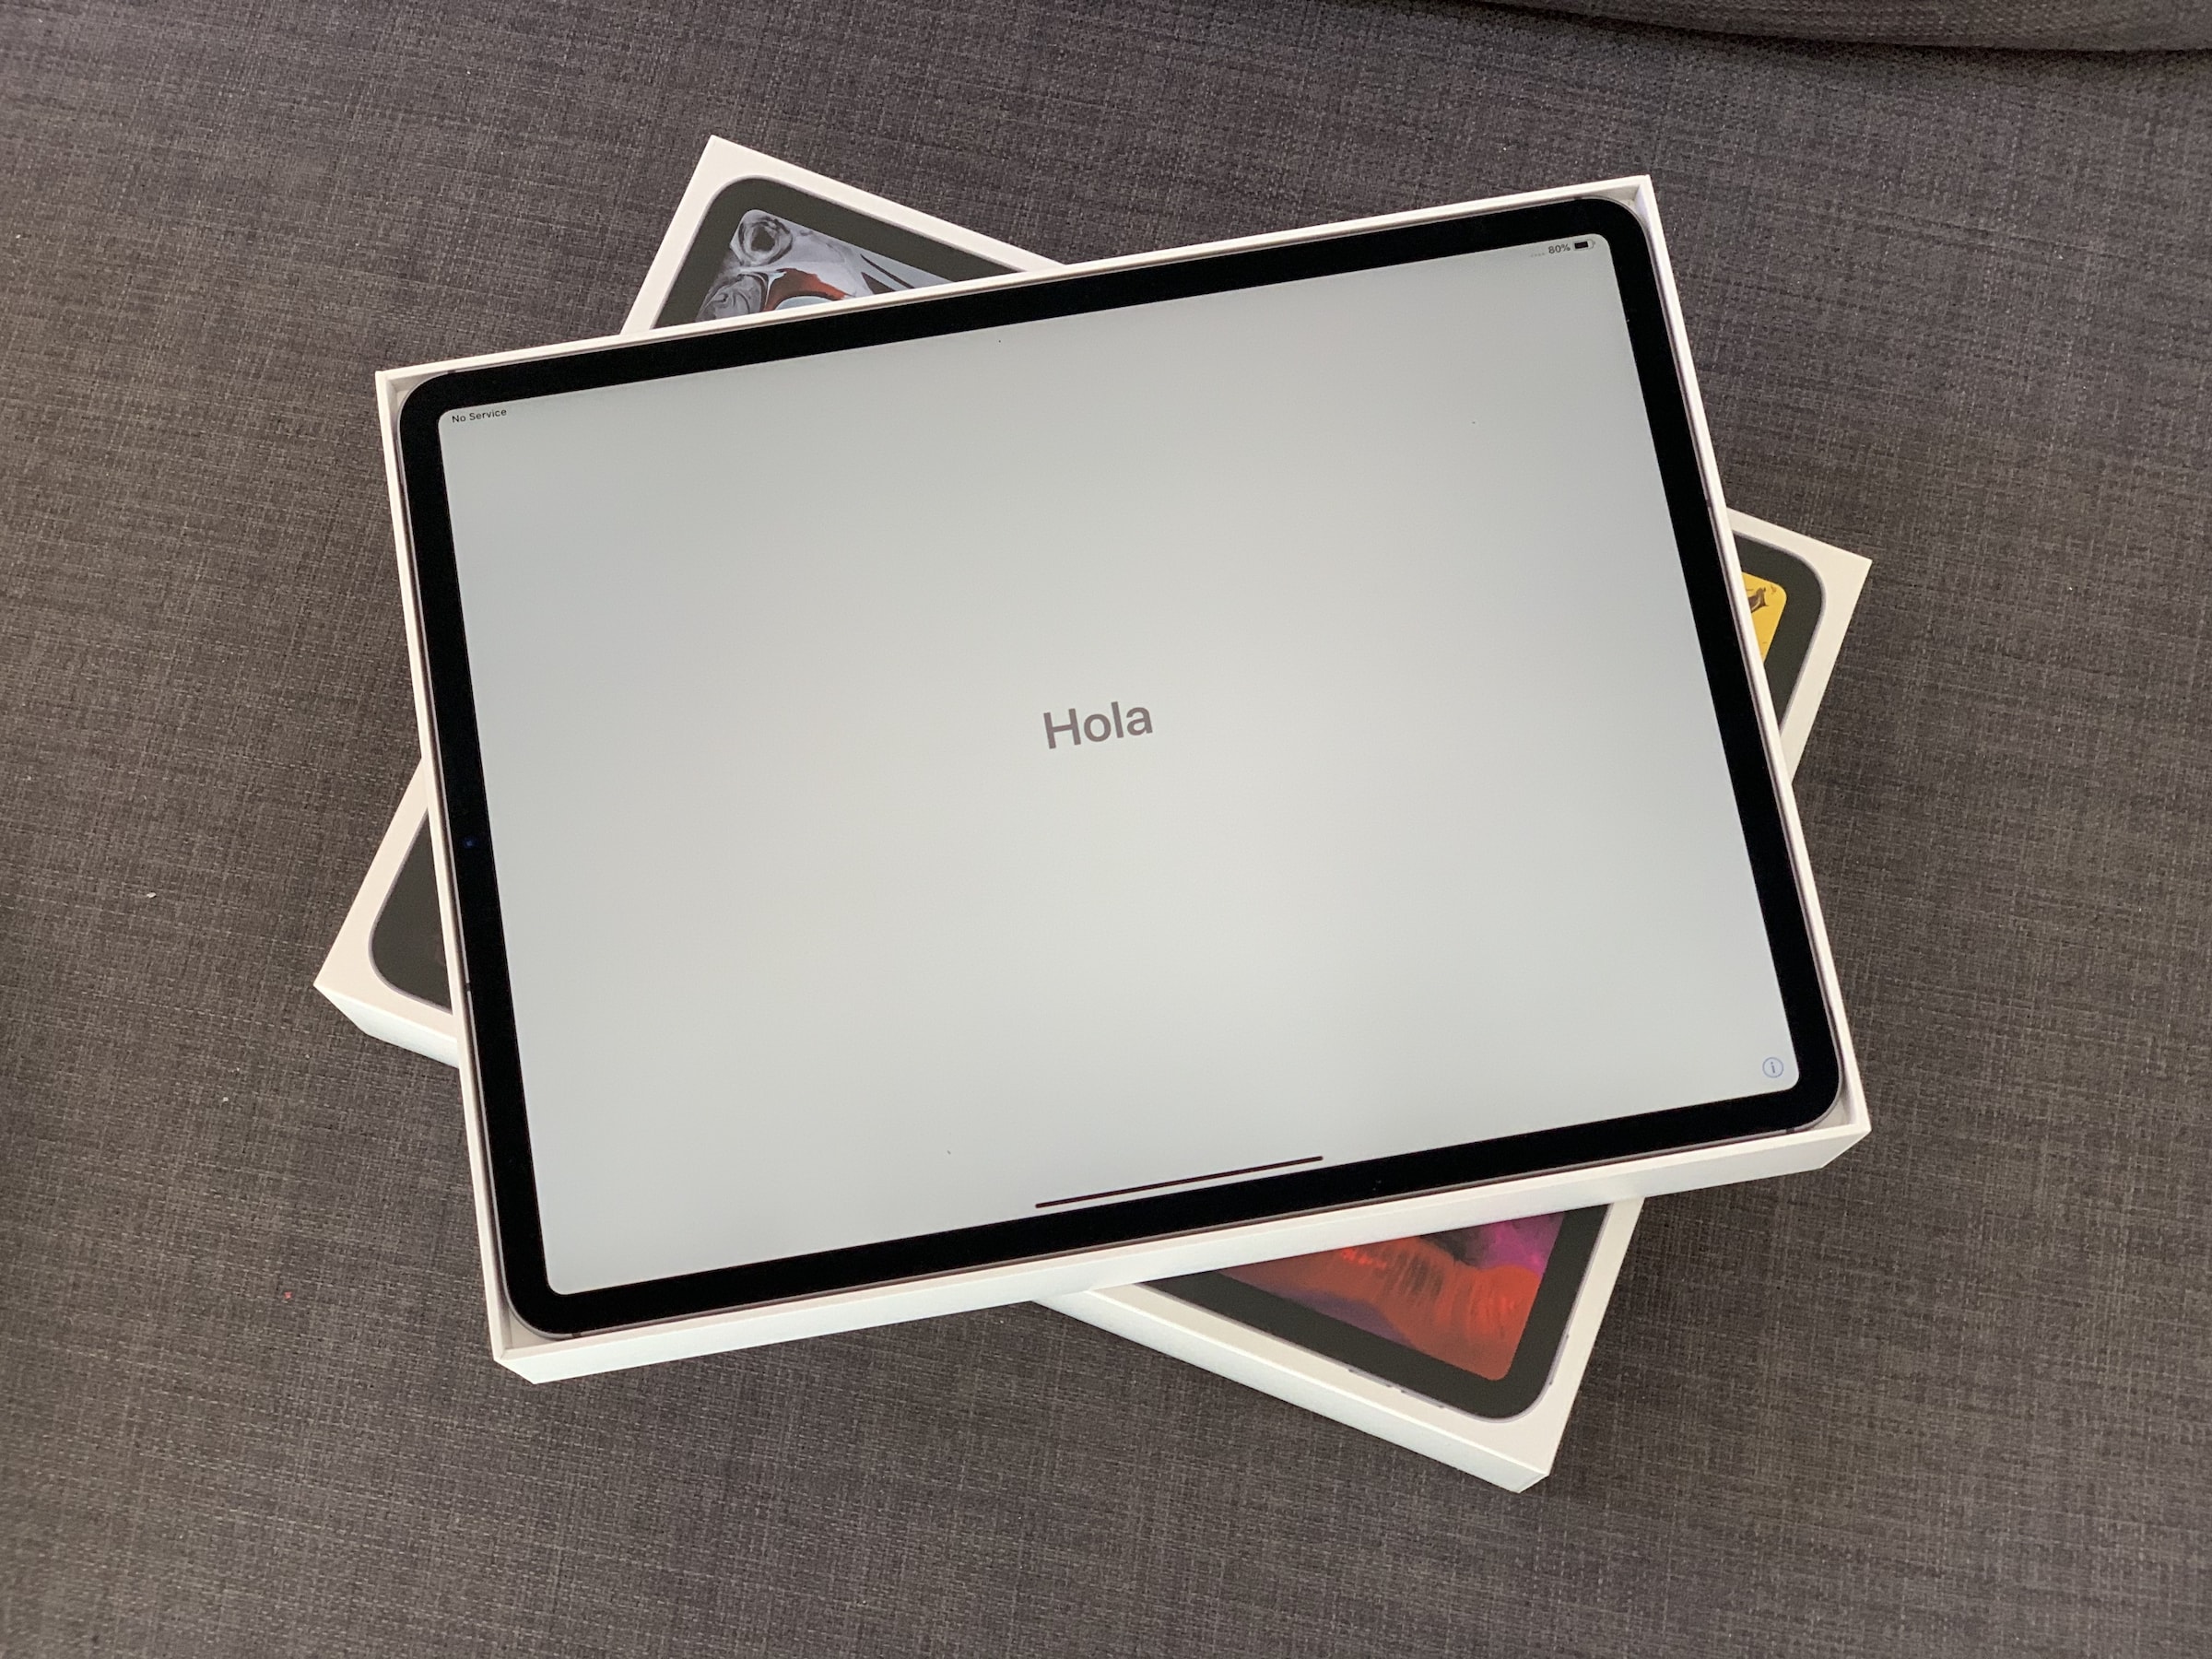 2018 iPad Pro unboxing